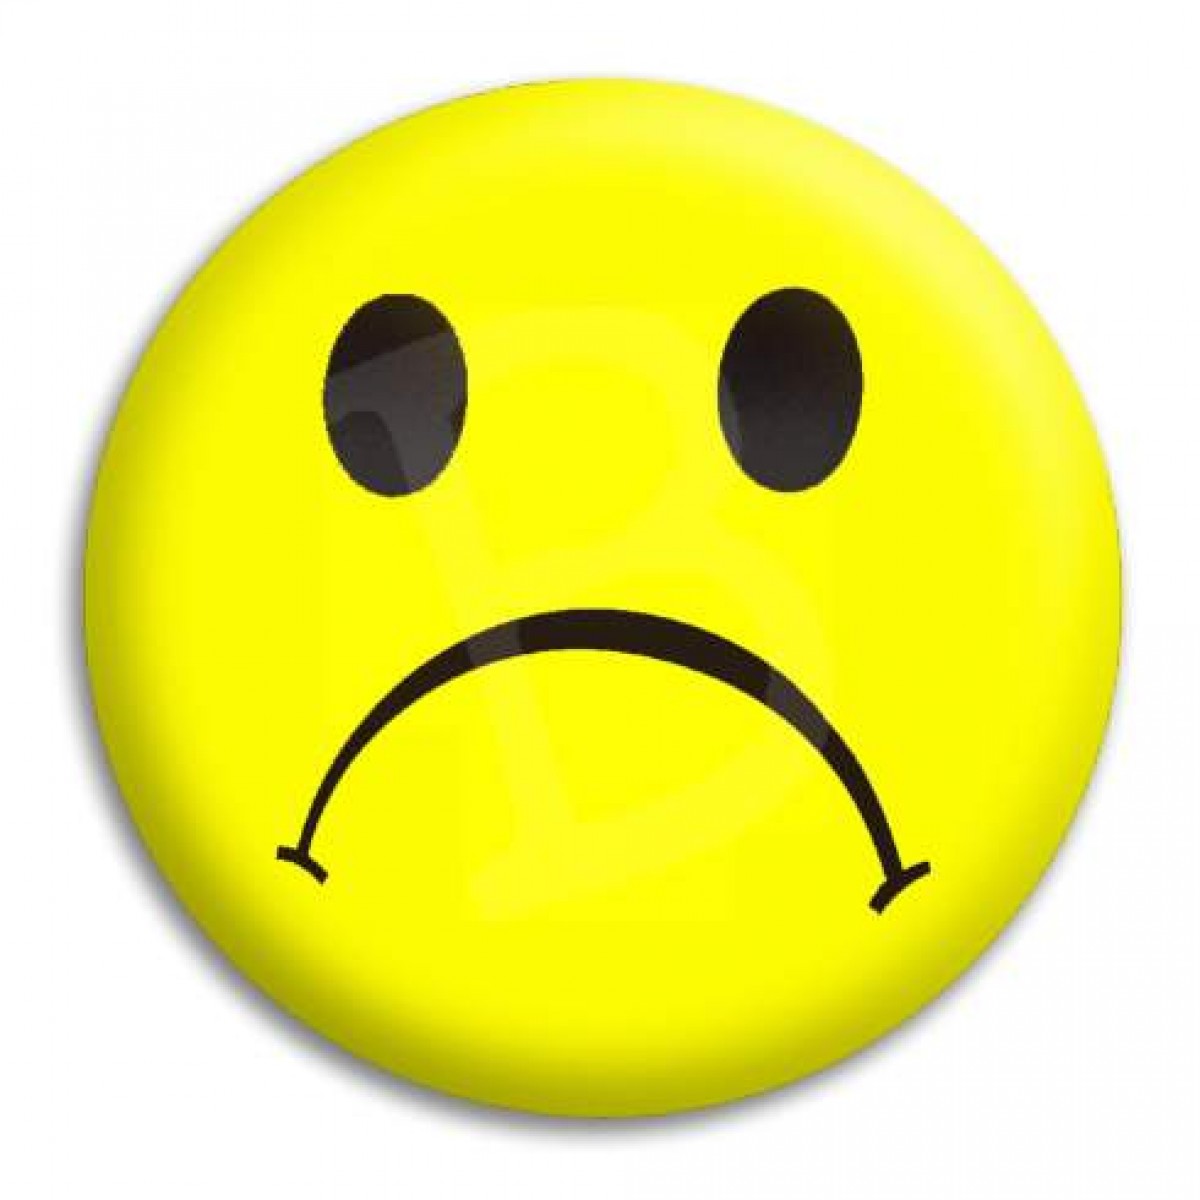 Sad Face Emoji Free Clipart Flowerkamilia